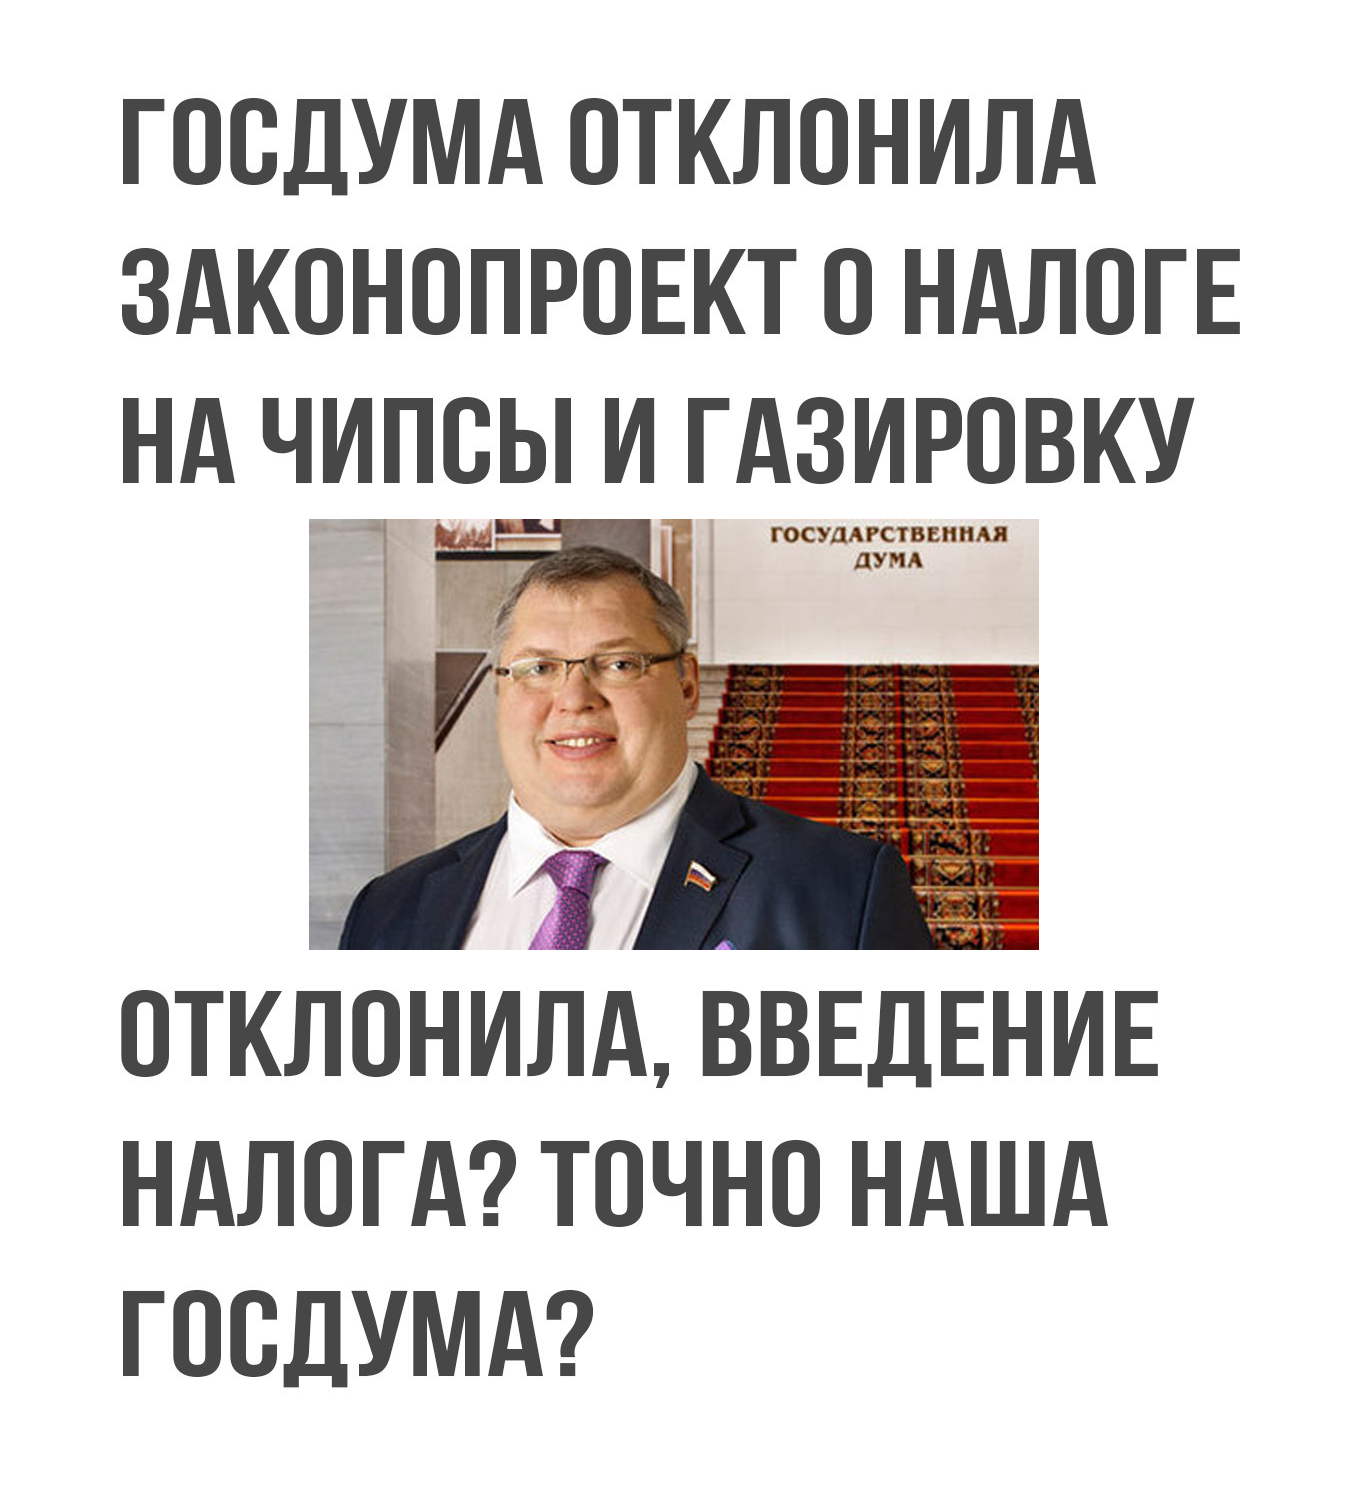 When deputies also like chips :3 - State Duma, RF laws, Tax, Crisps, Soda, Russia, Politics, Law